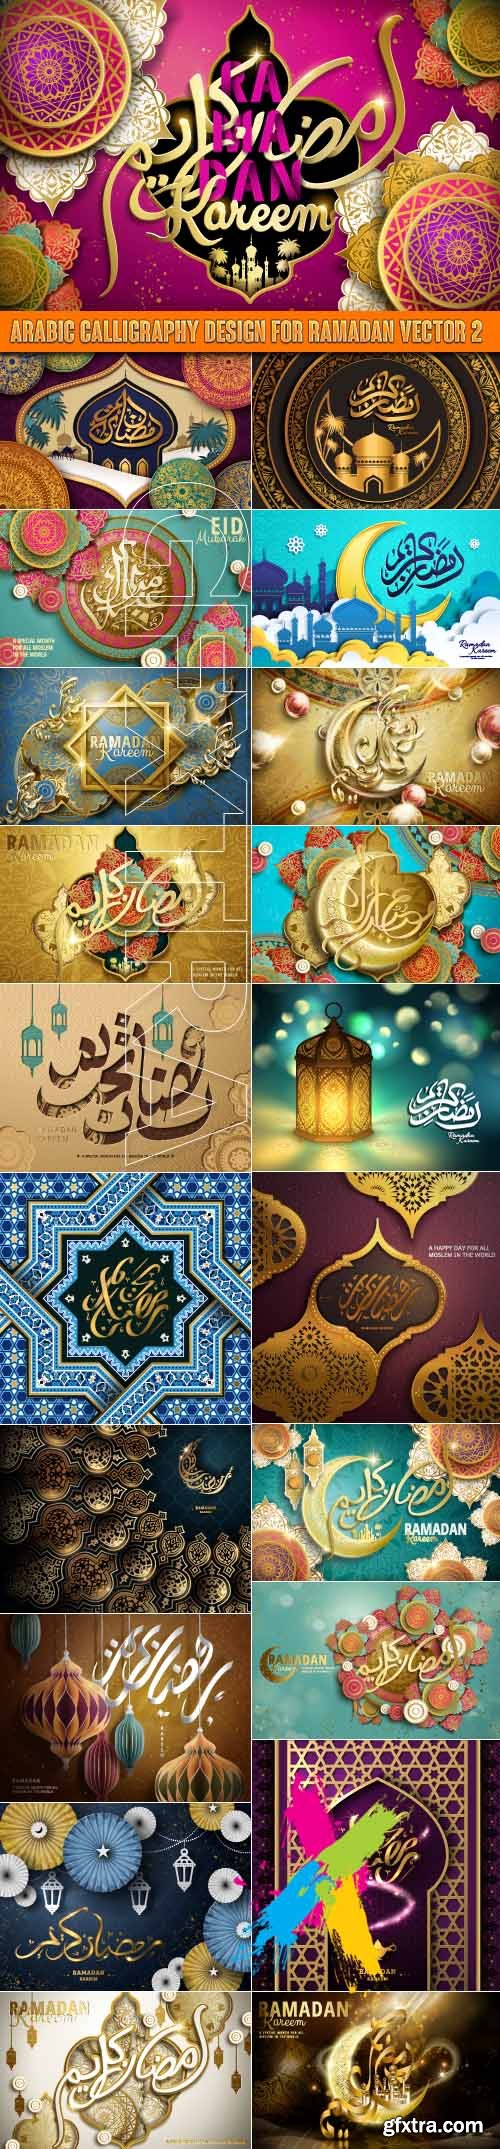 Arabic calligraphy design for Ramadan vector 2